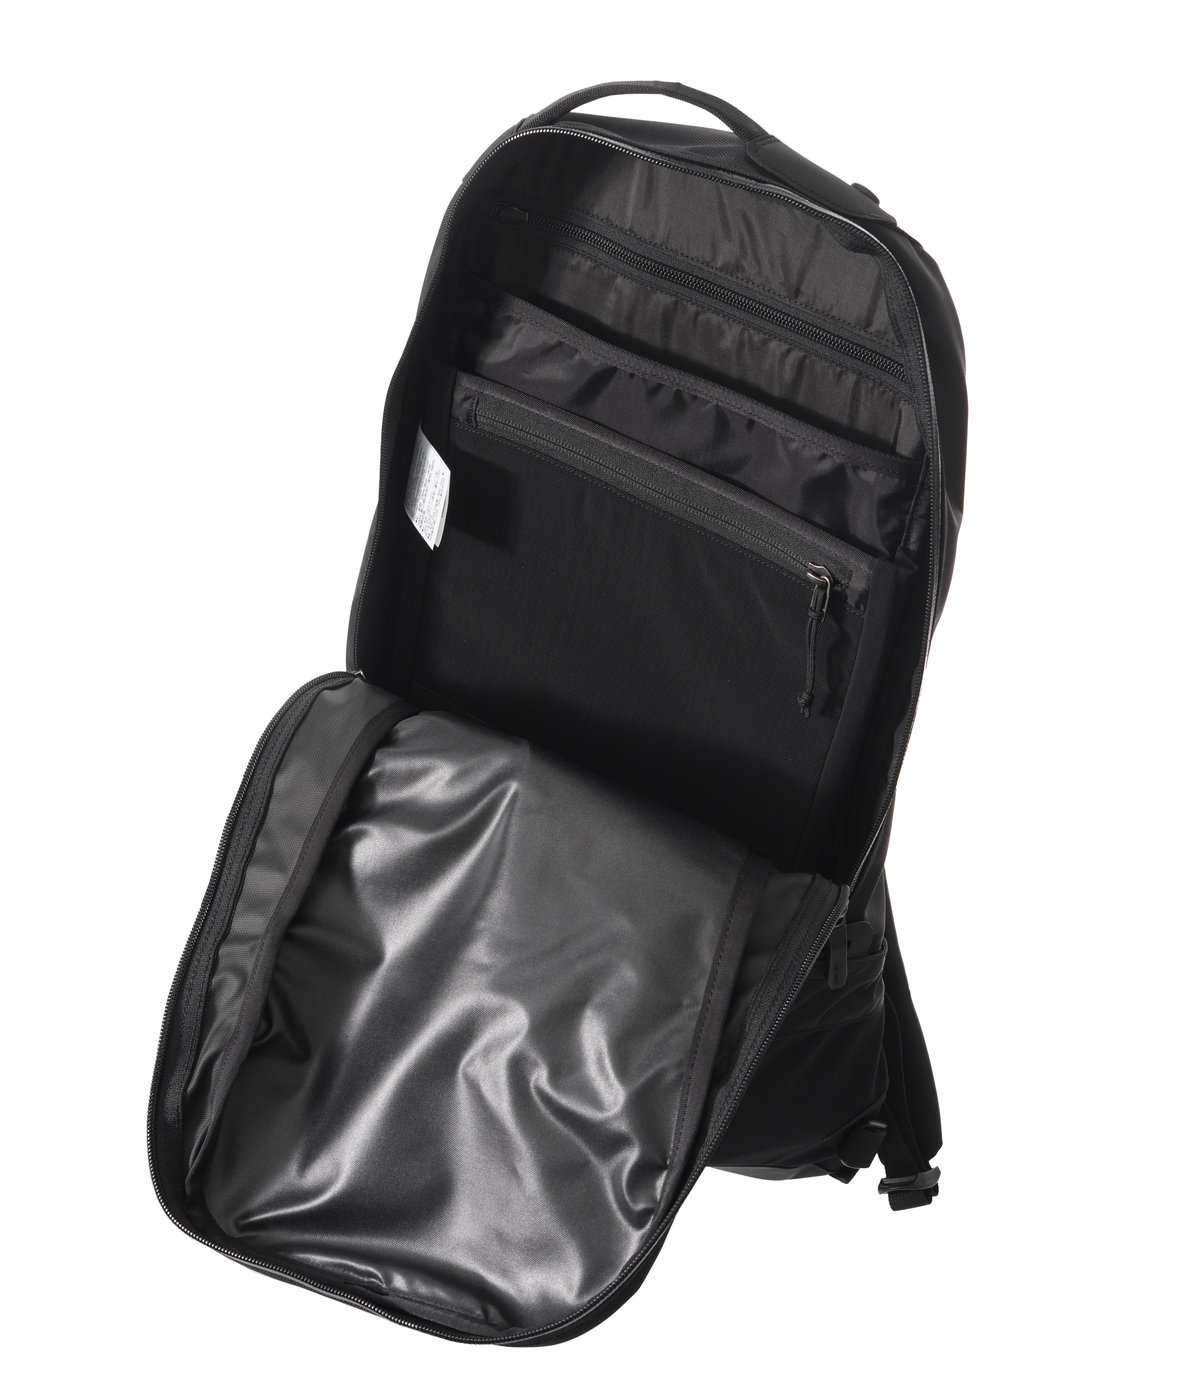 Arro 22 Backpack | ARC'TERYX(アークテリクス) / バッグ バックパック 